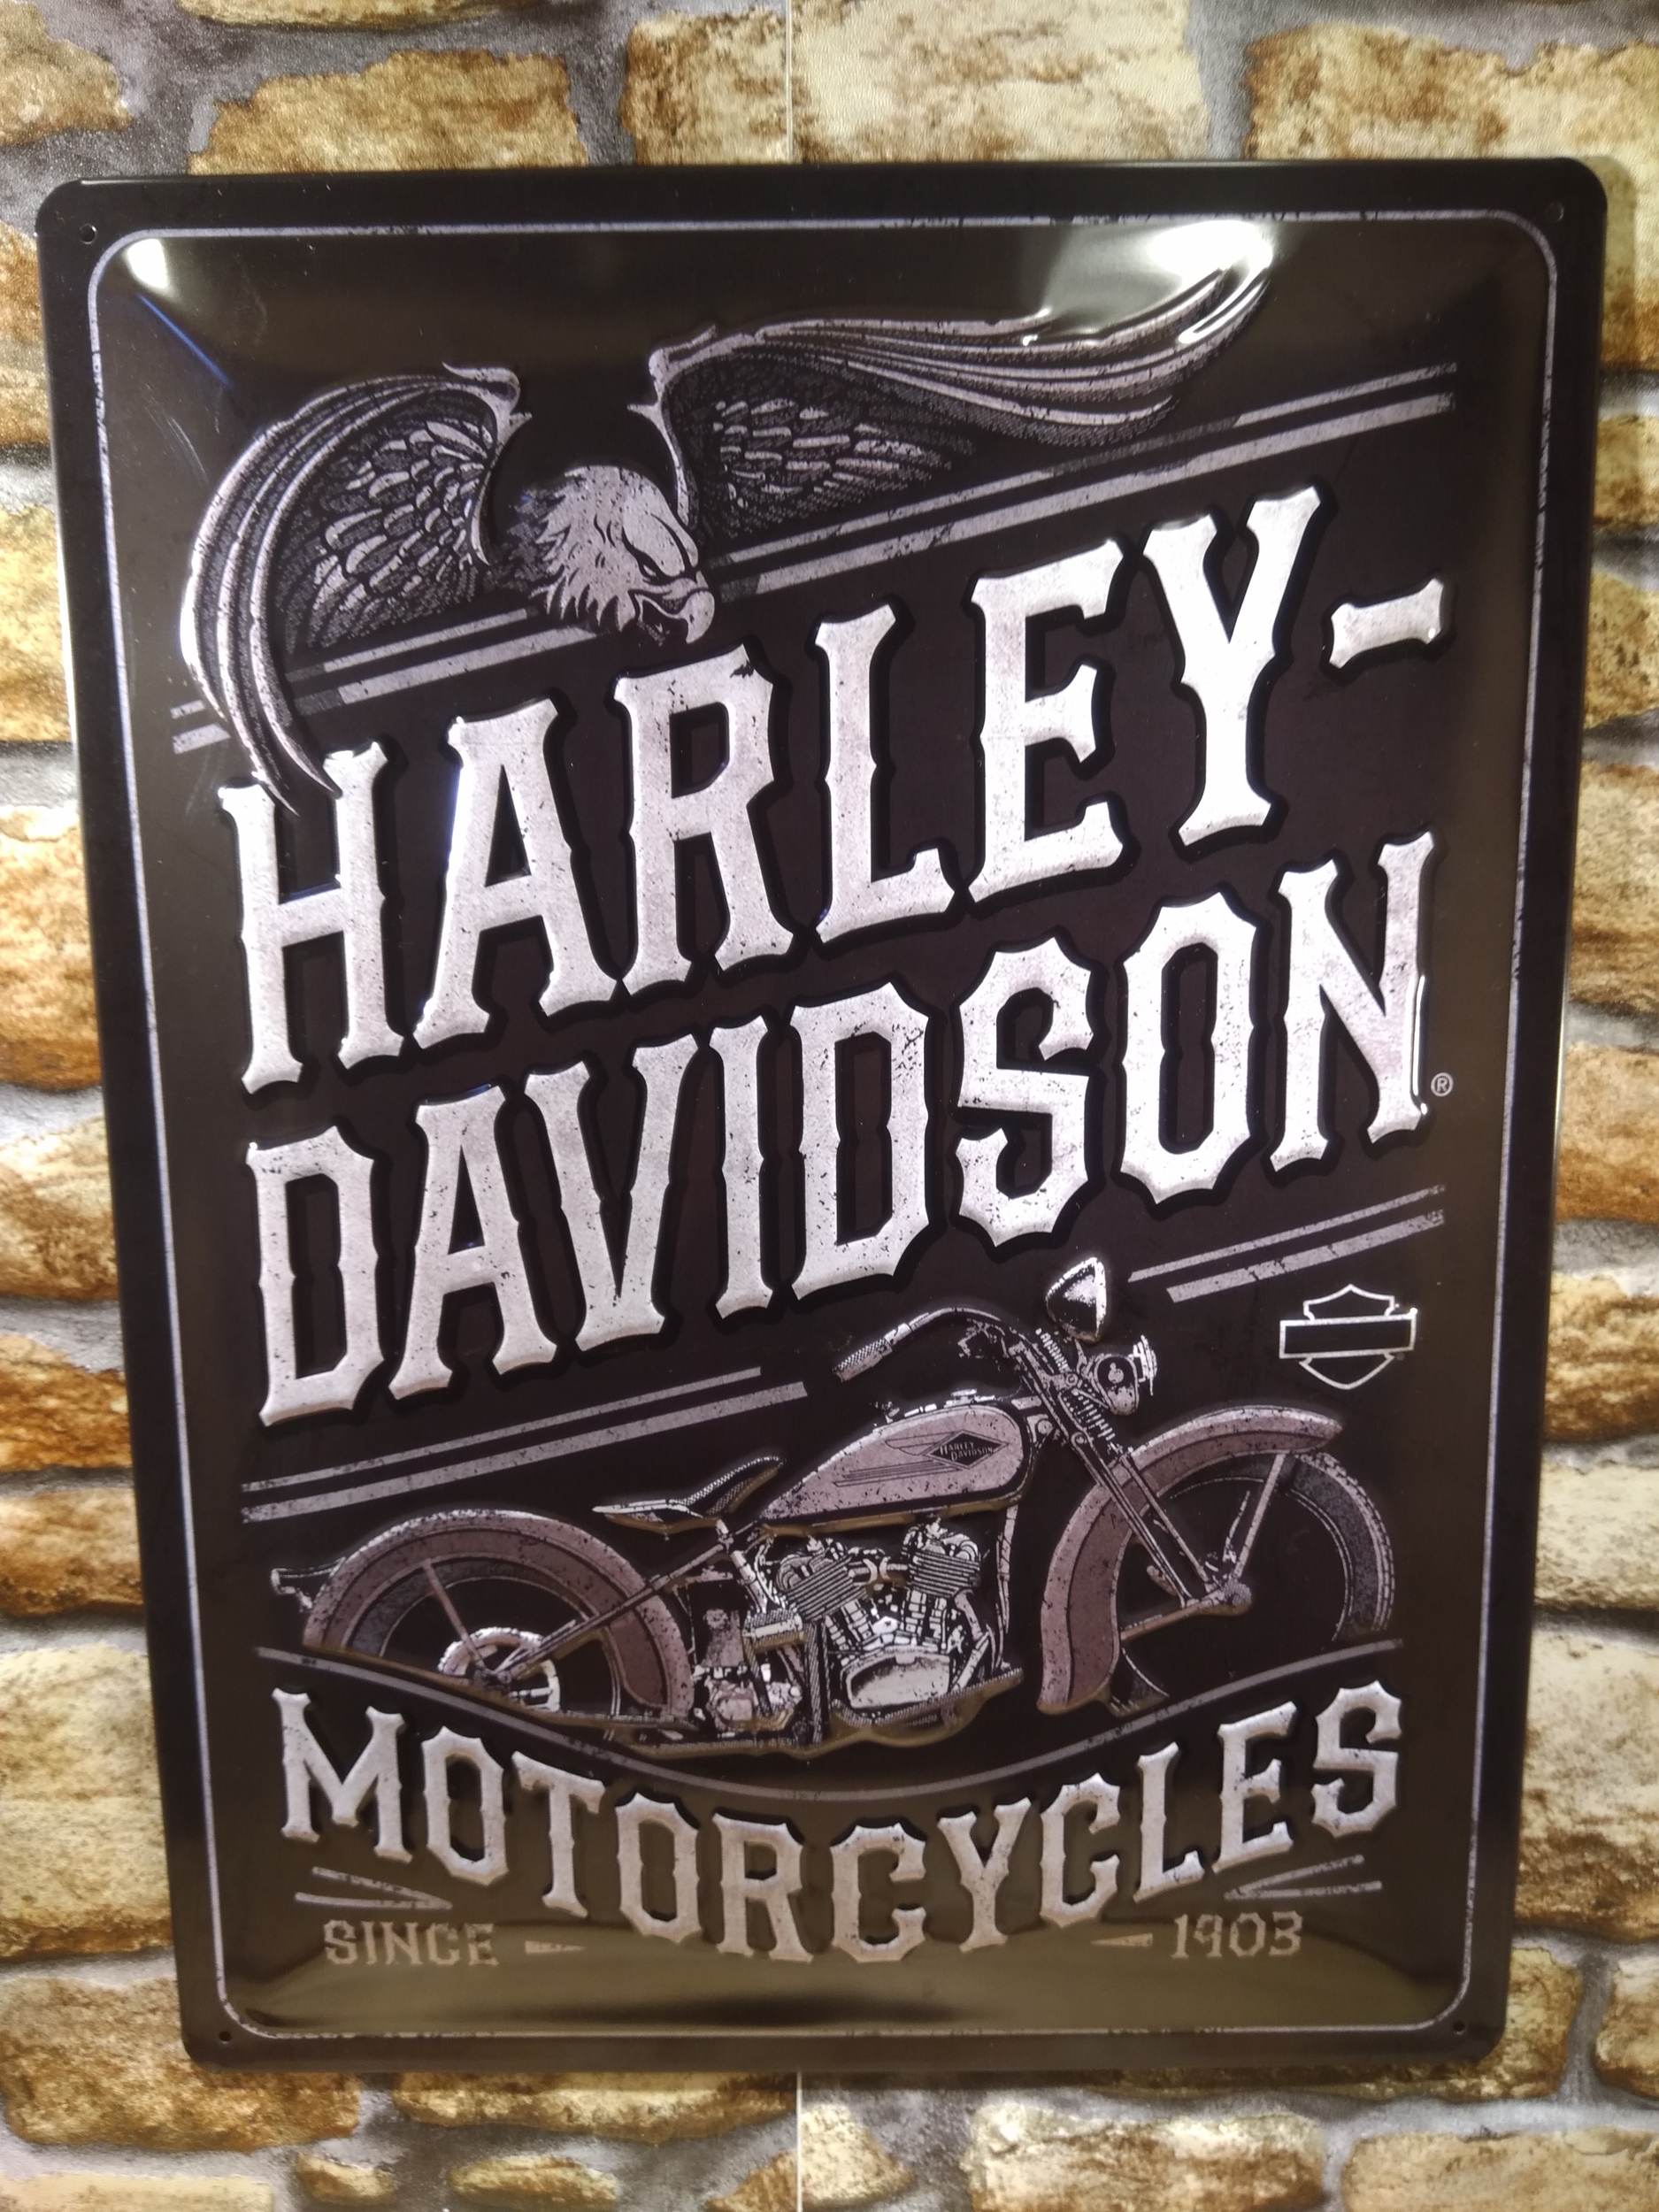 plaque métal harley davidson motorcycles